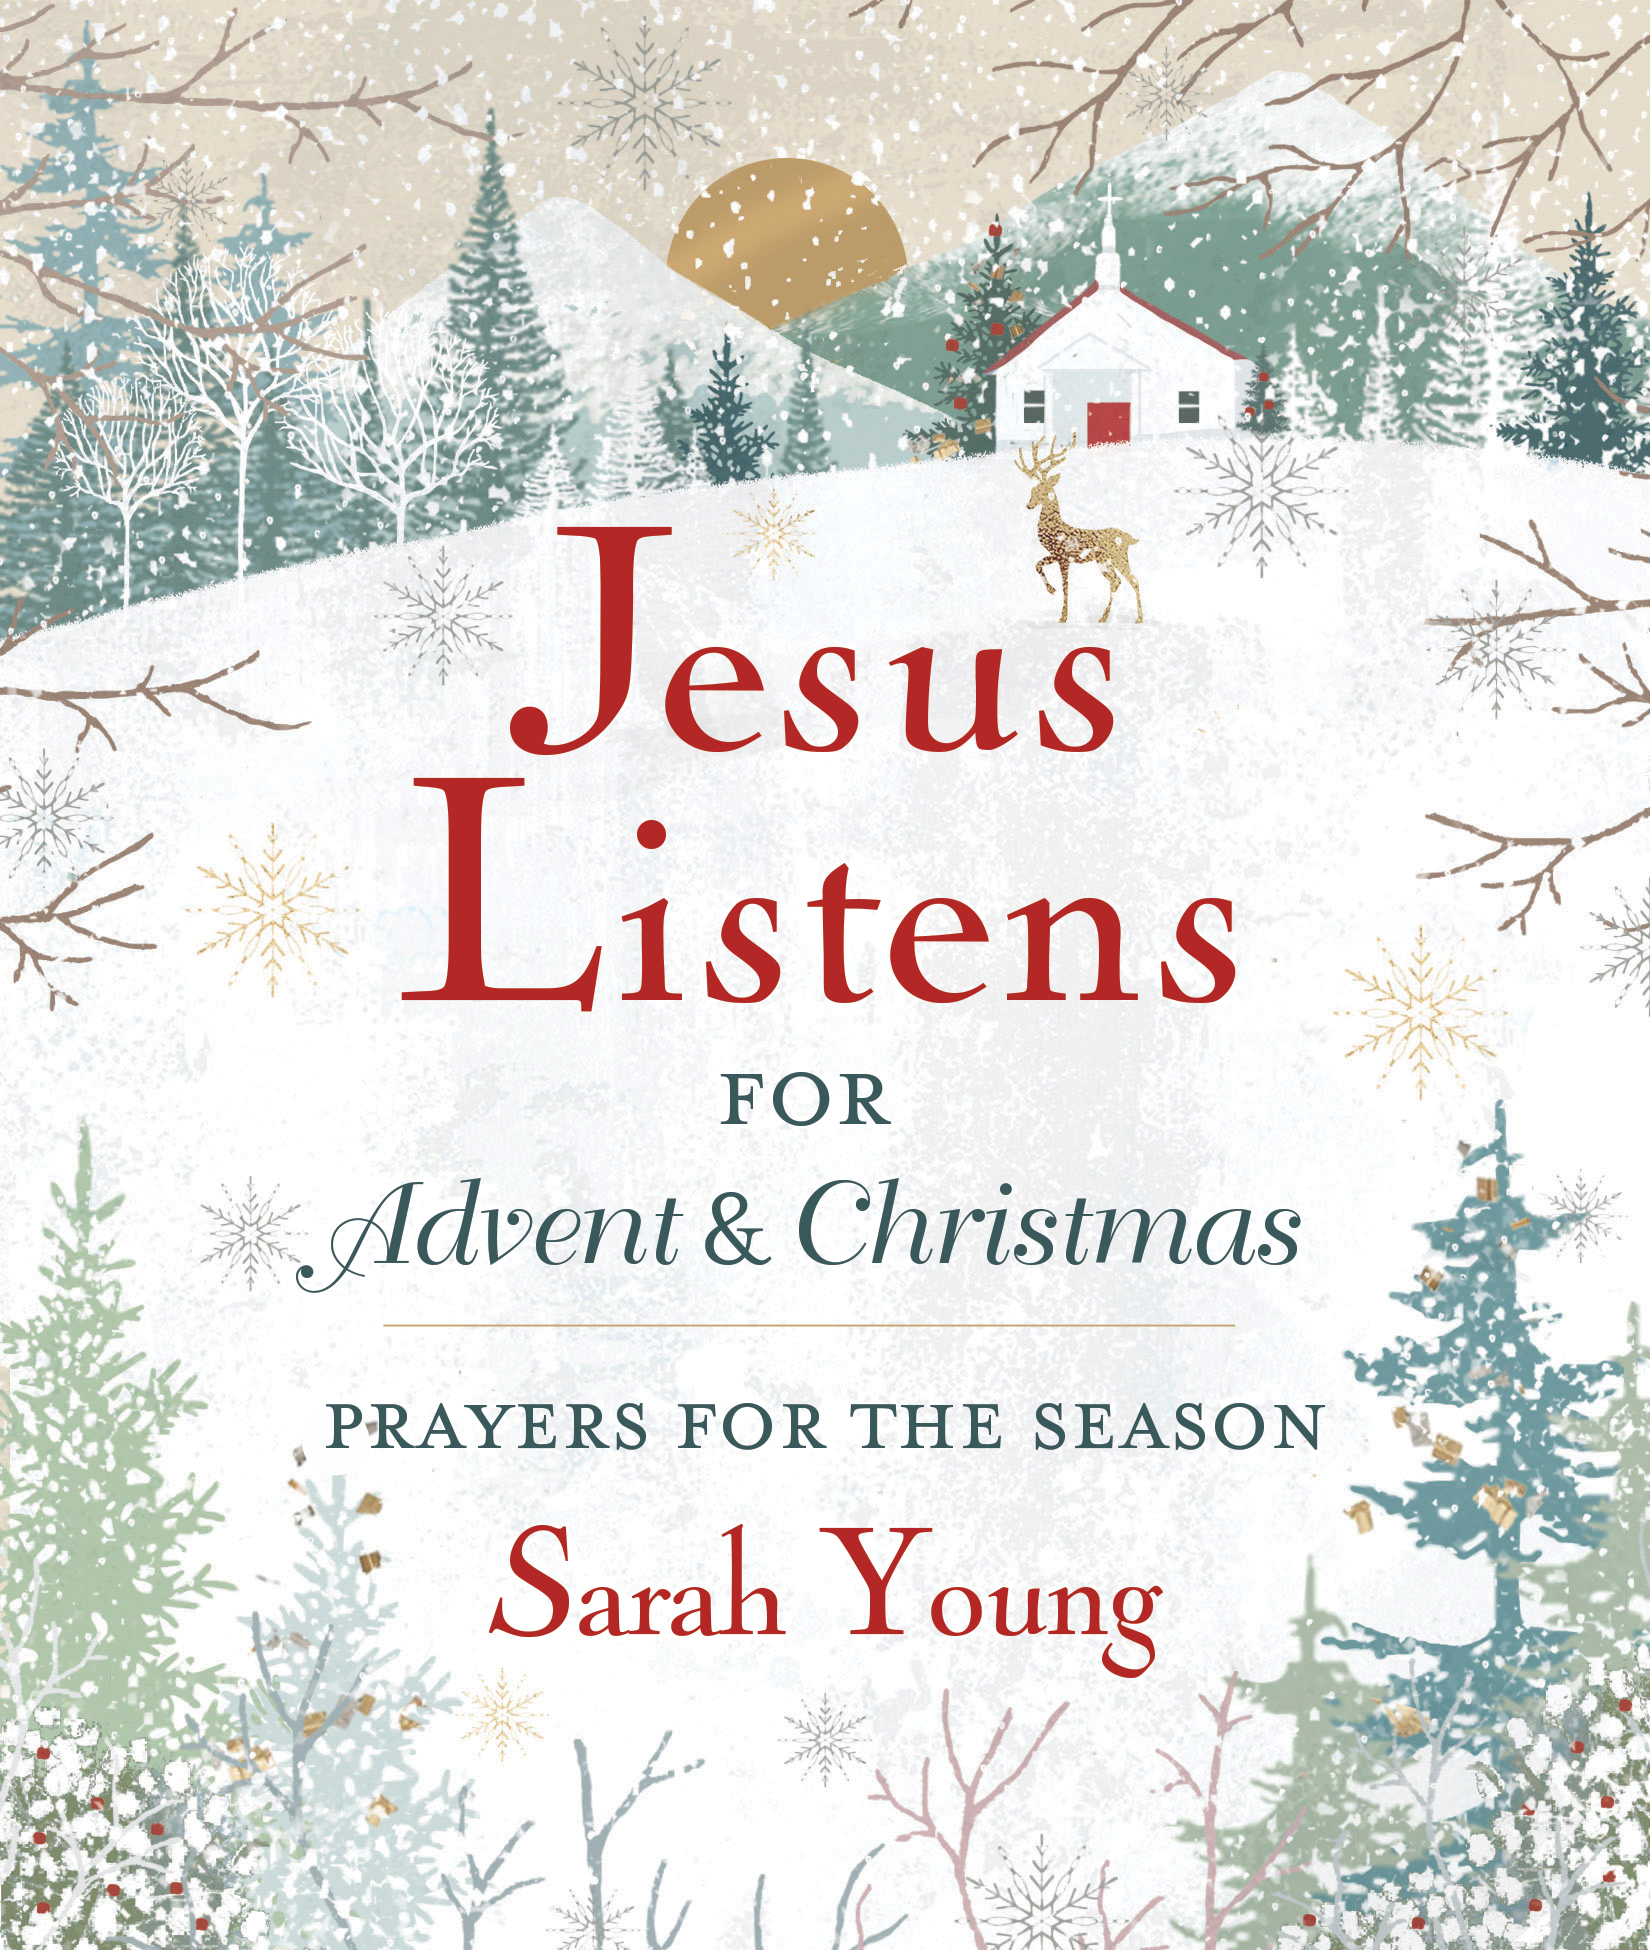 Jesus Listens for Advent & Christmas